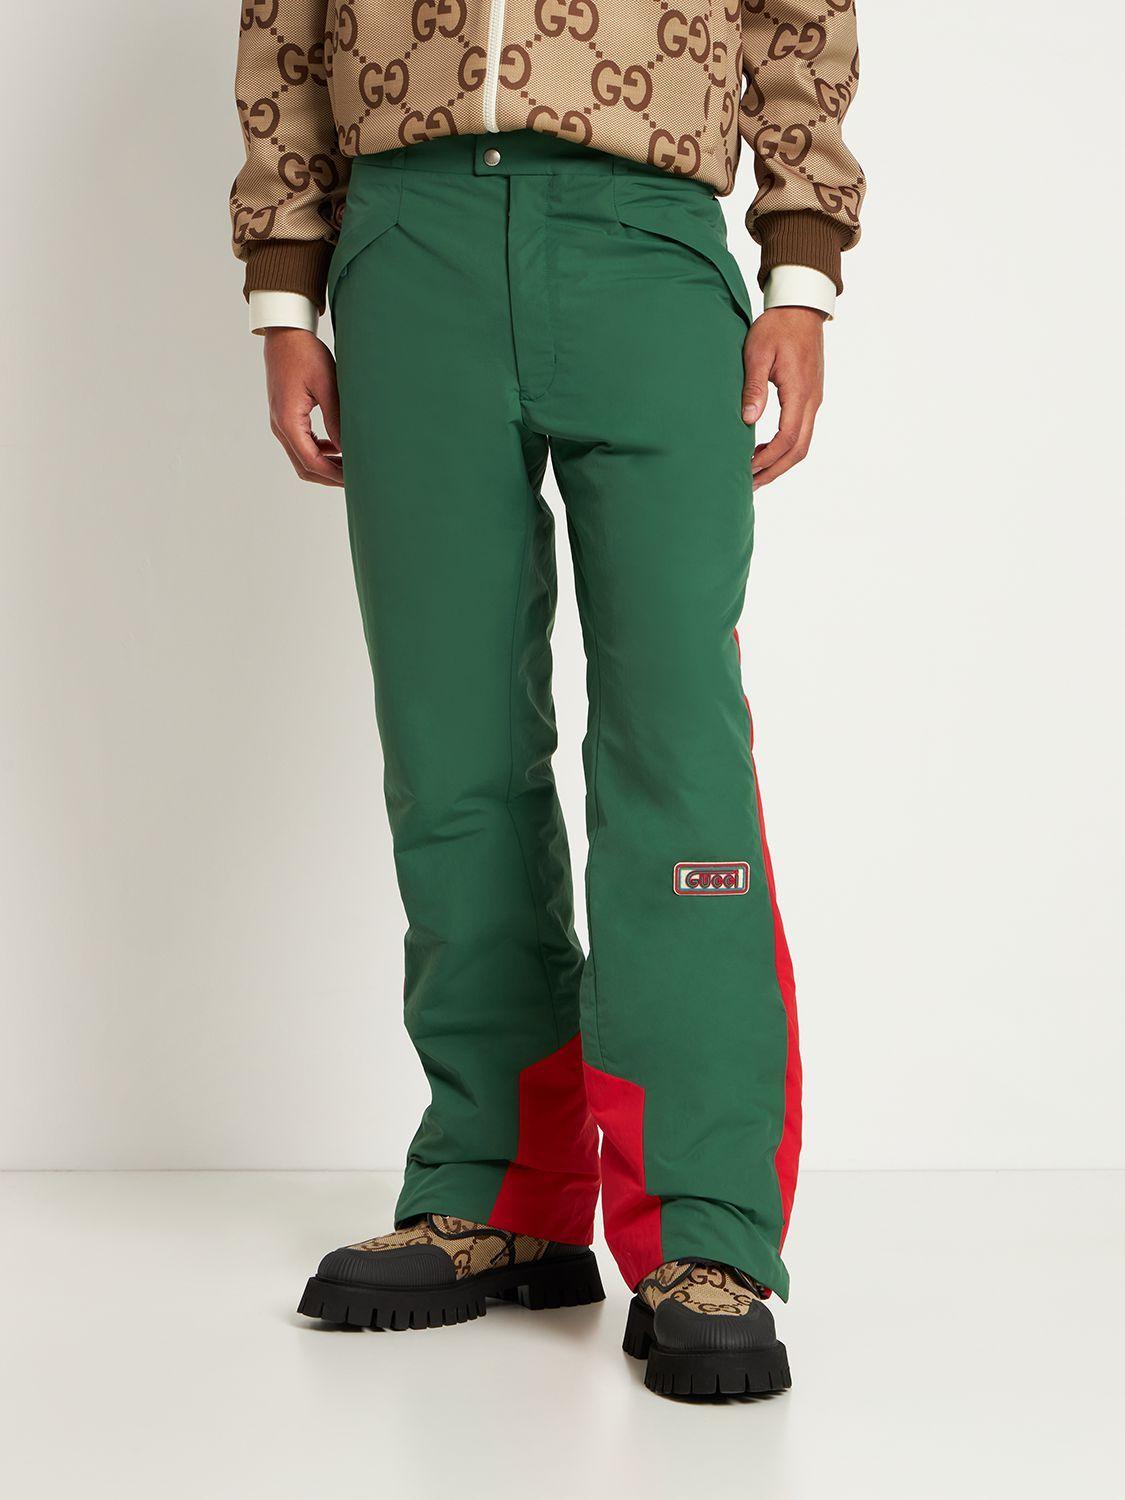 Gucci Men's GG Cotton-Blend Ski Pants - Natural - Casual Pants